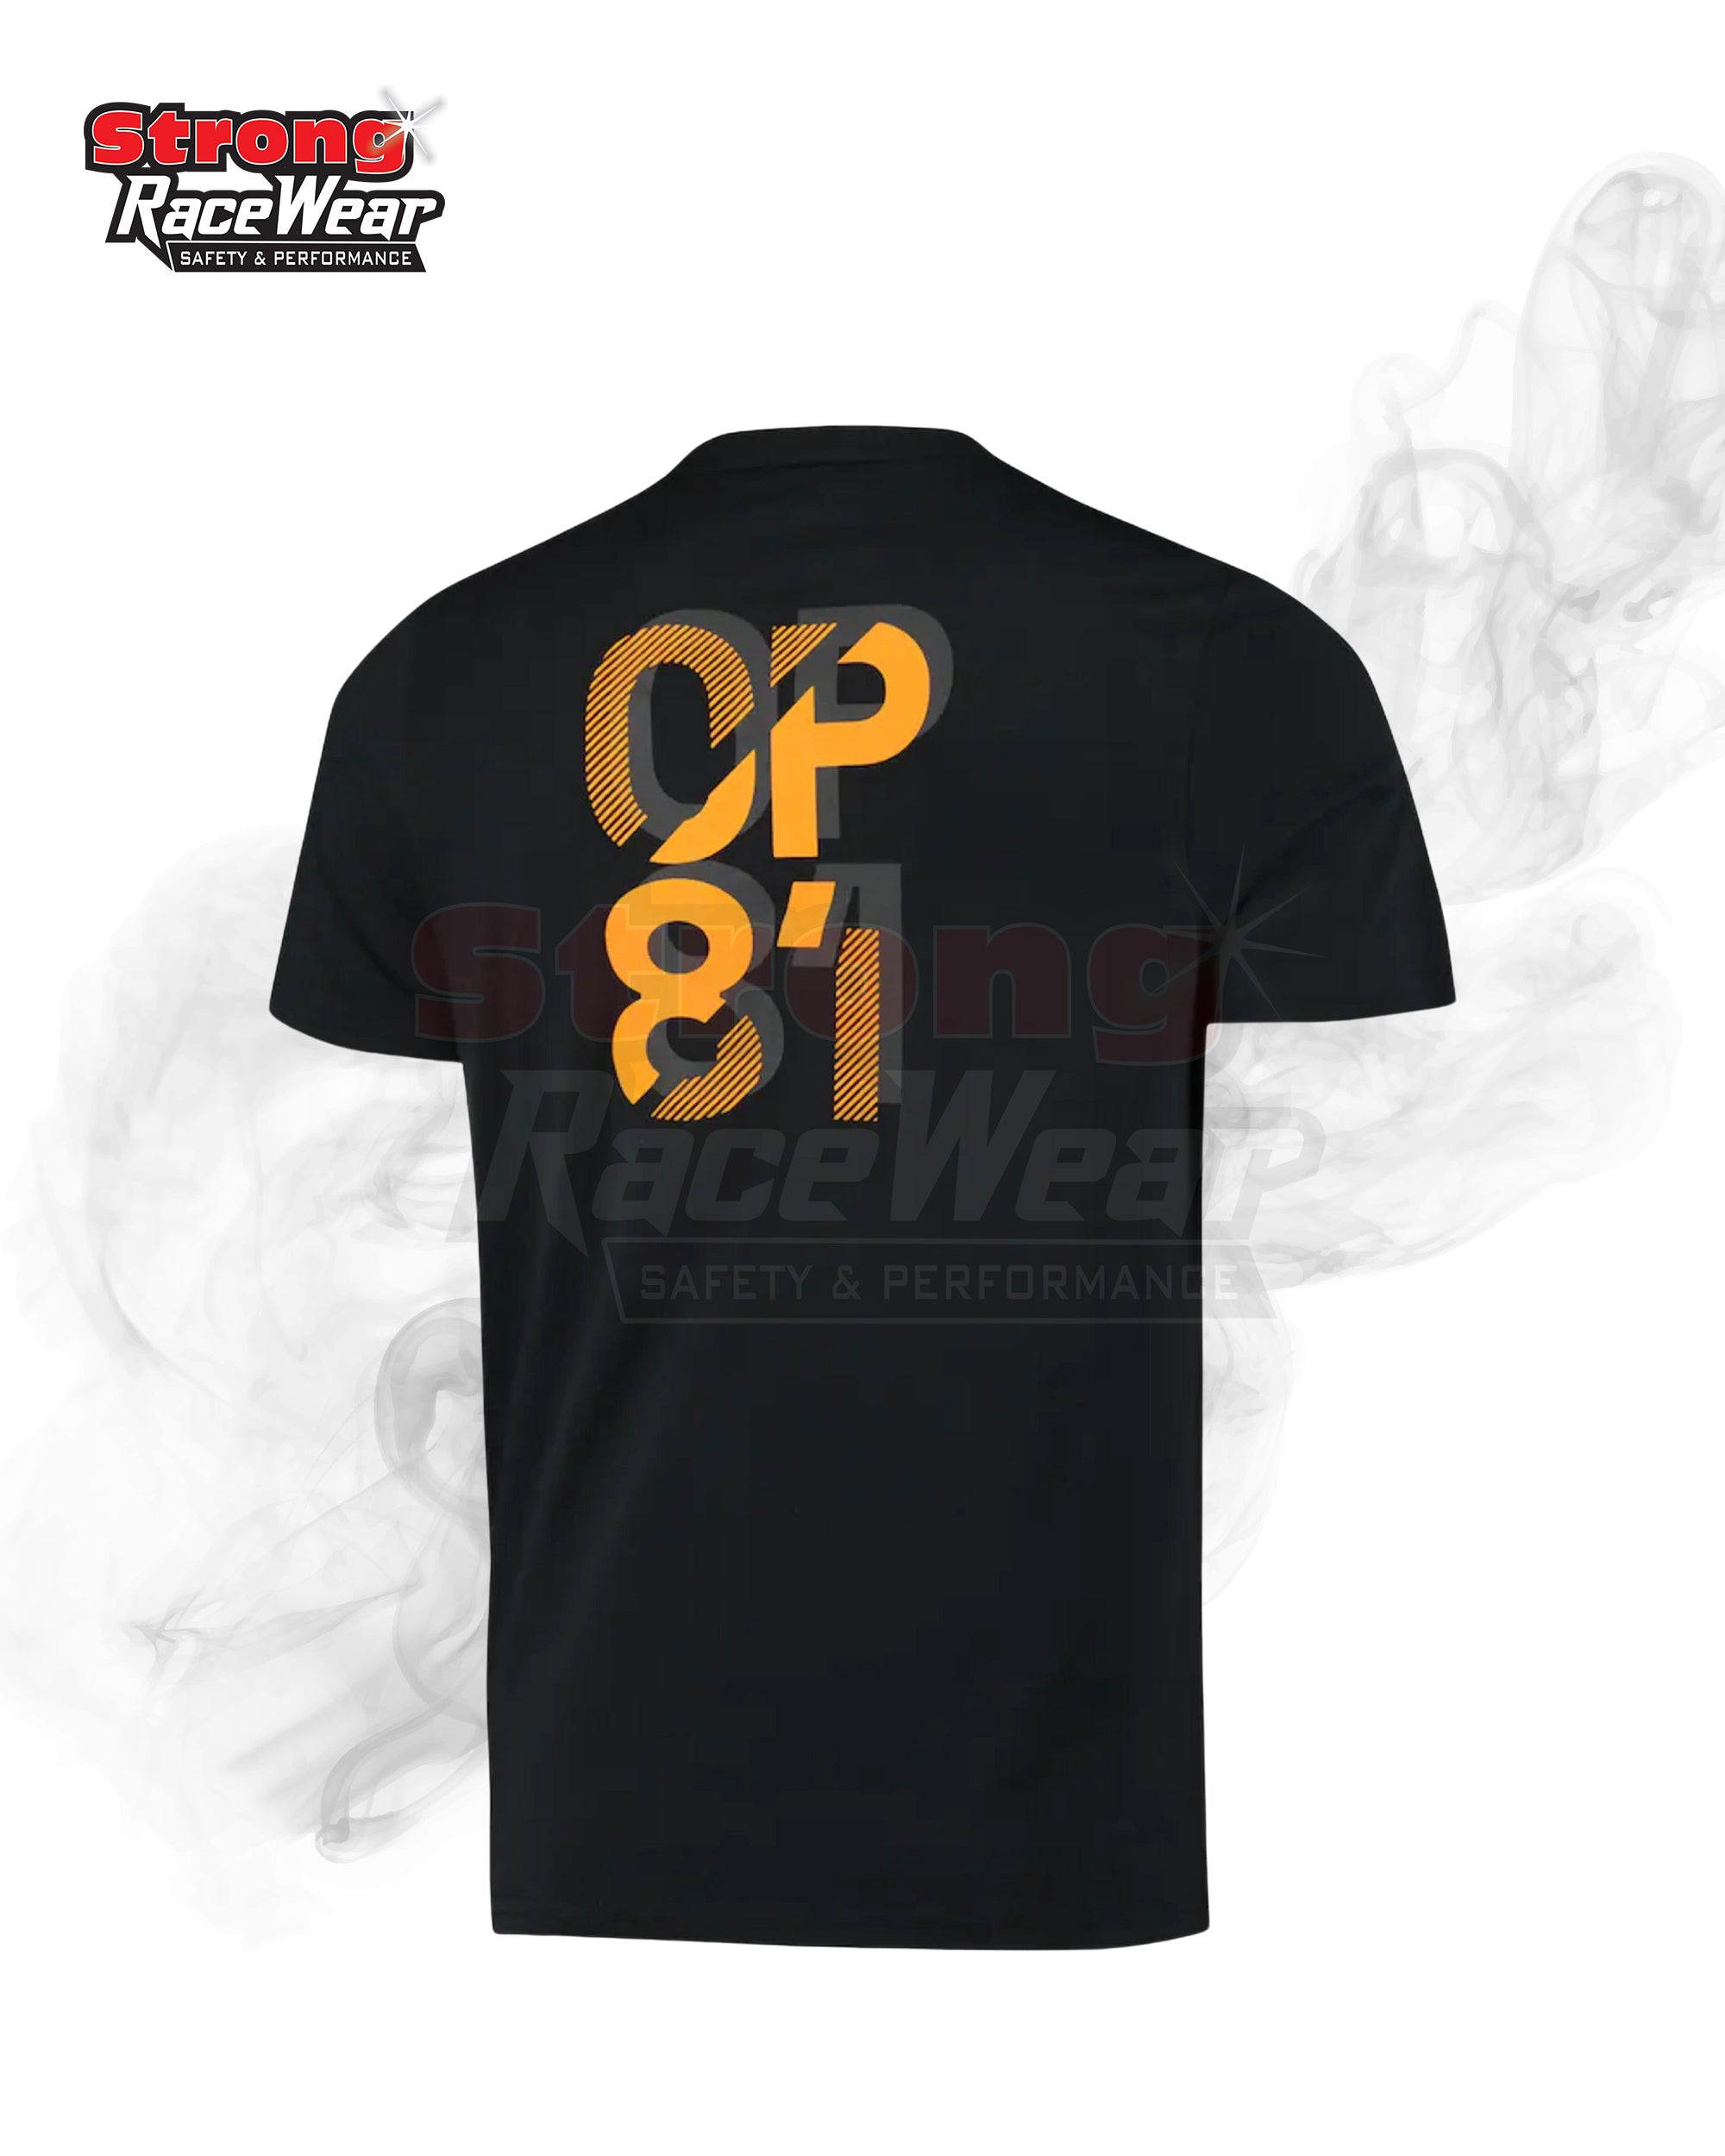 McLaren Oscar Piastri No.81 T-Shirt